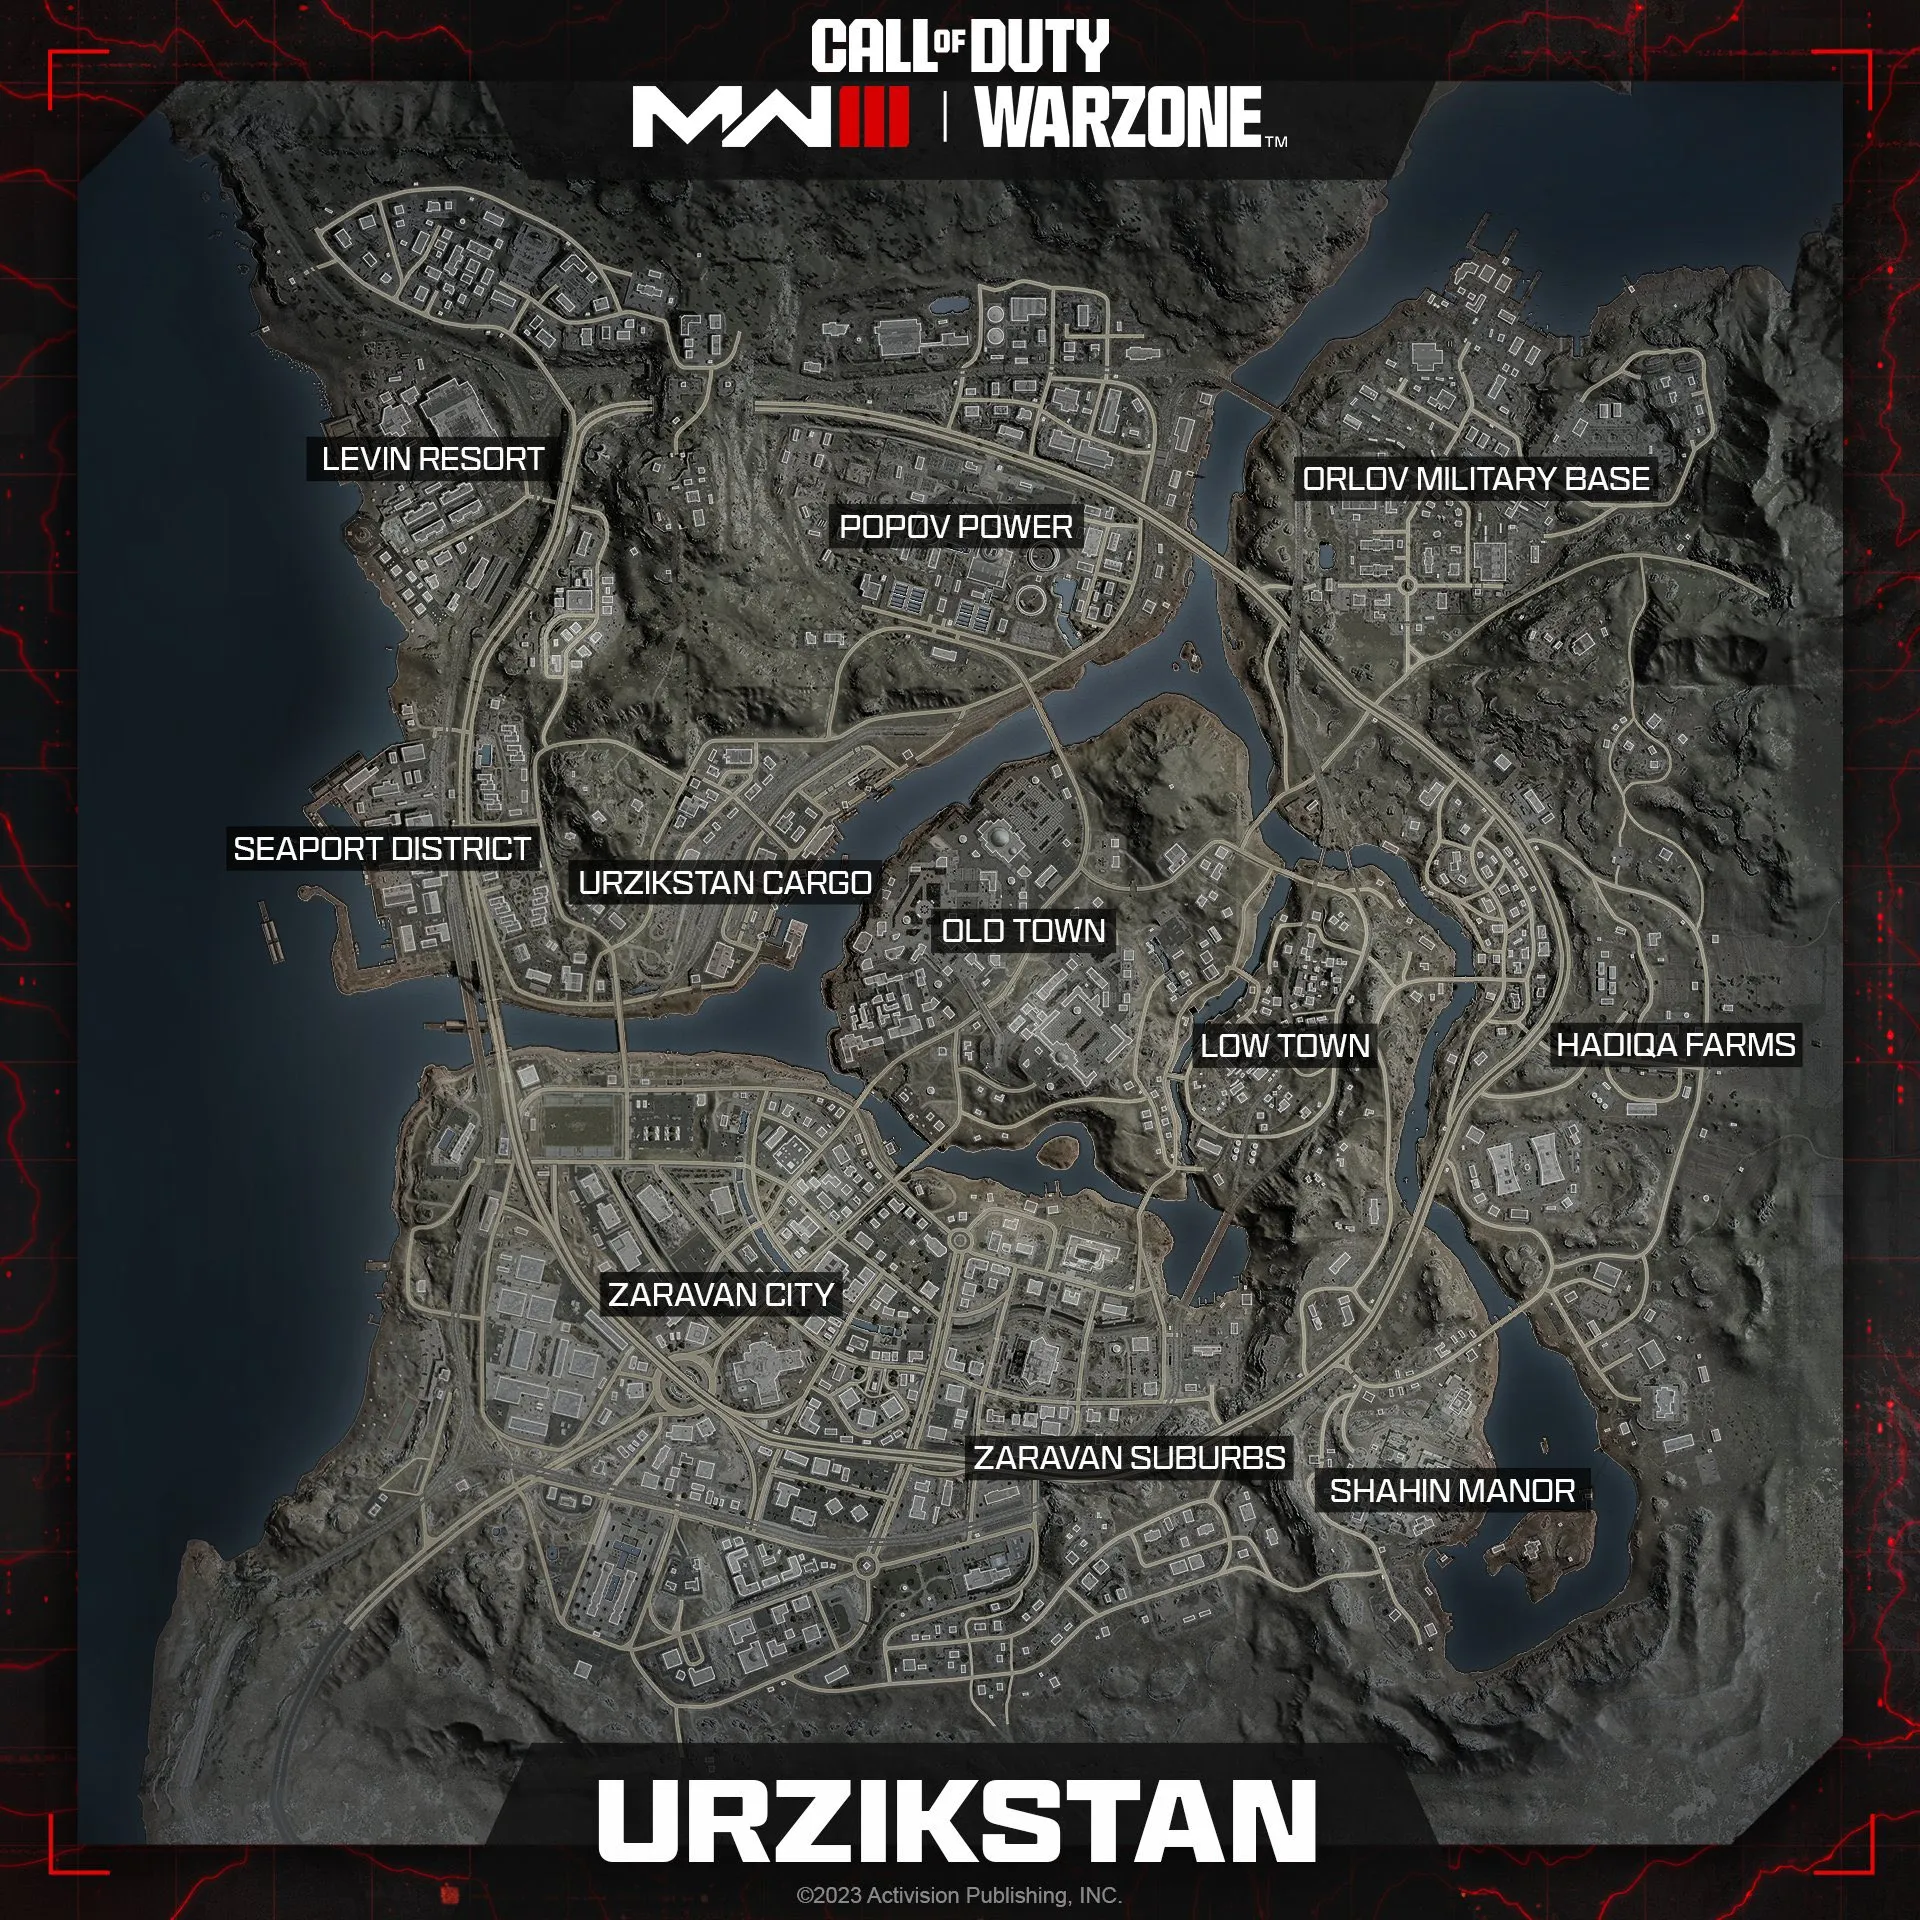 Warzone 2 unveils next map Ashika Island, coming with Season 2